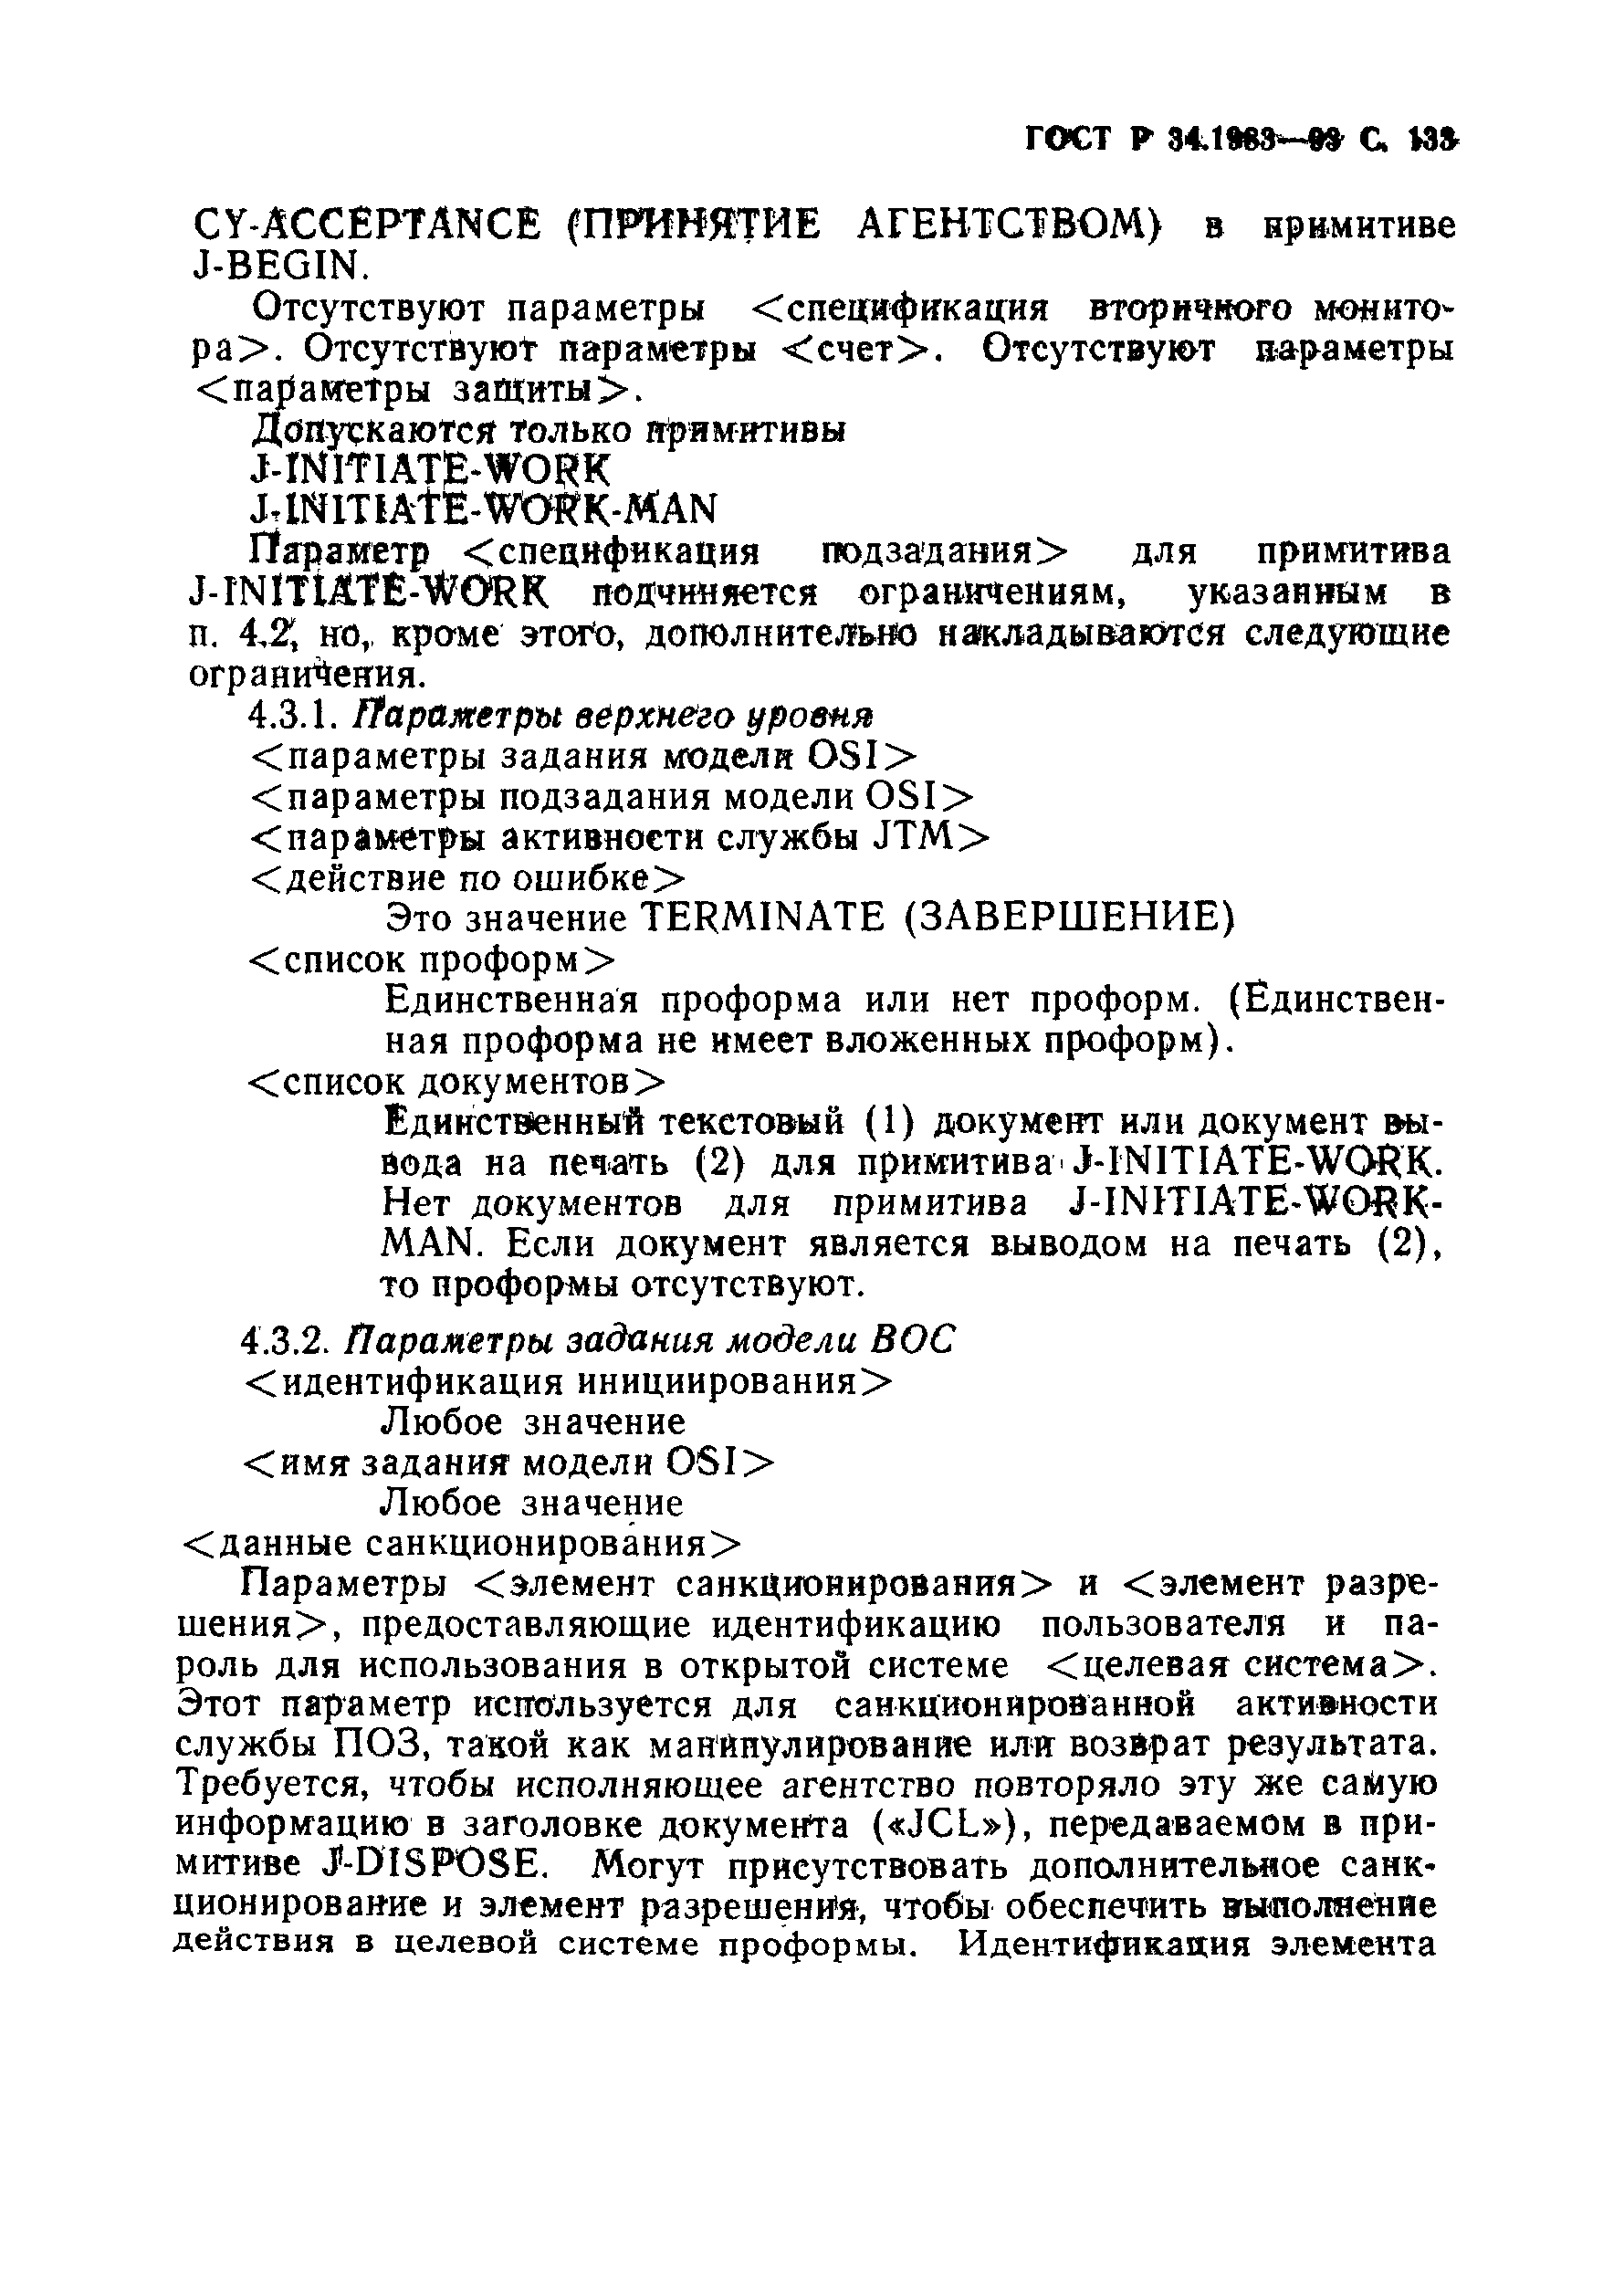 ГОСТ Р 34.1983-93. Страница 134